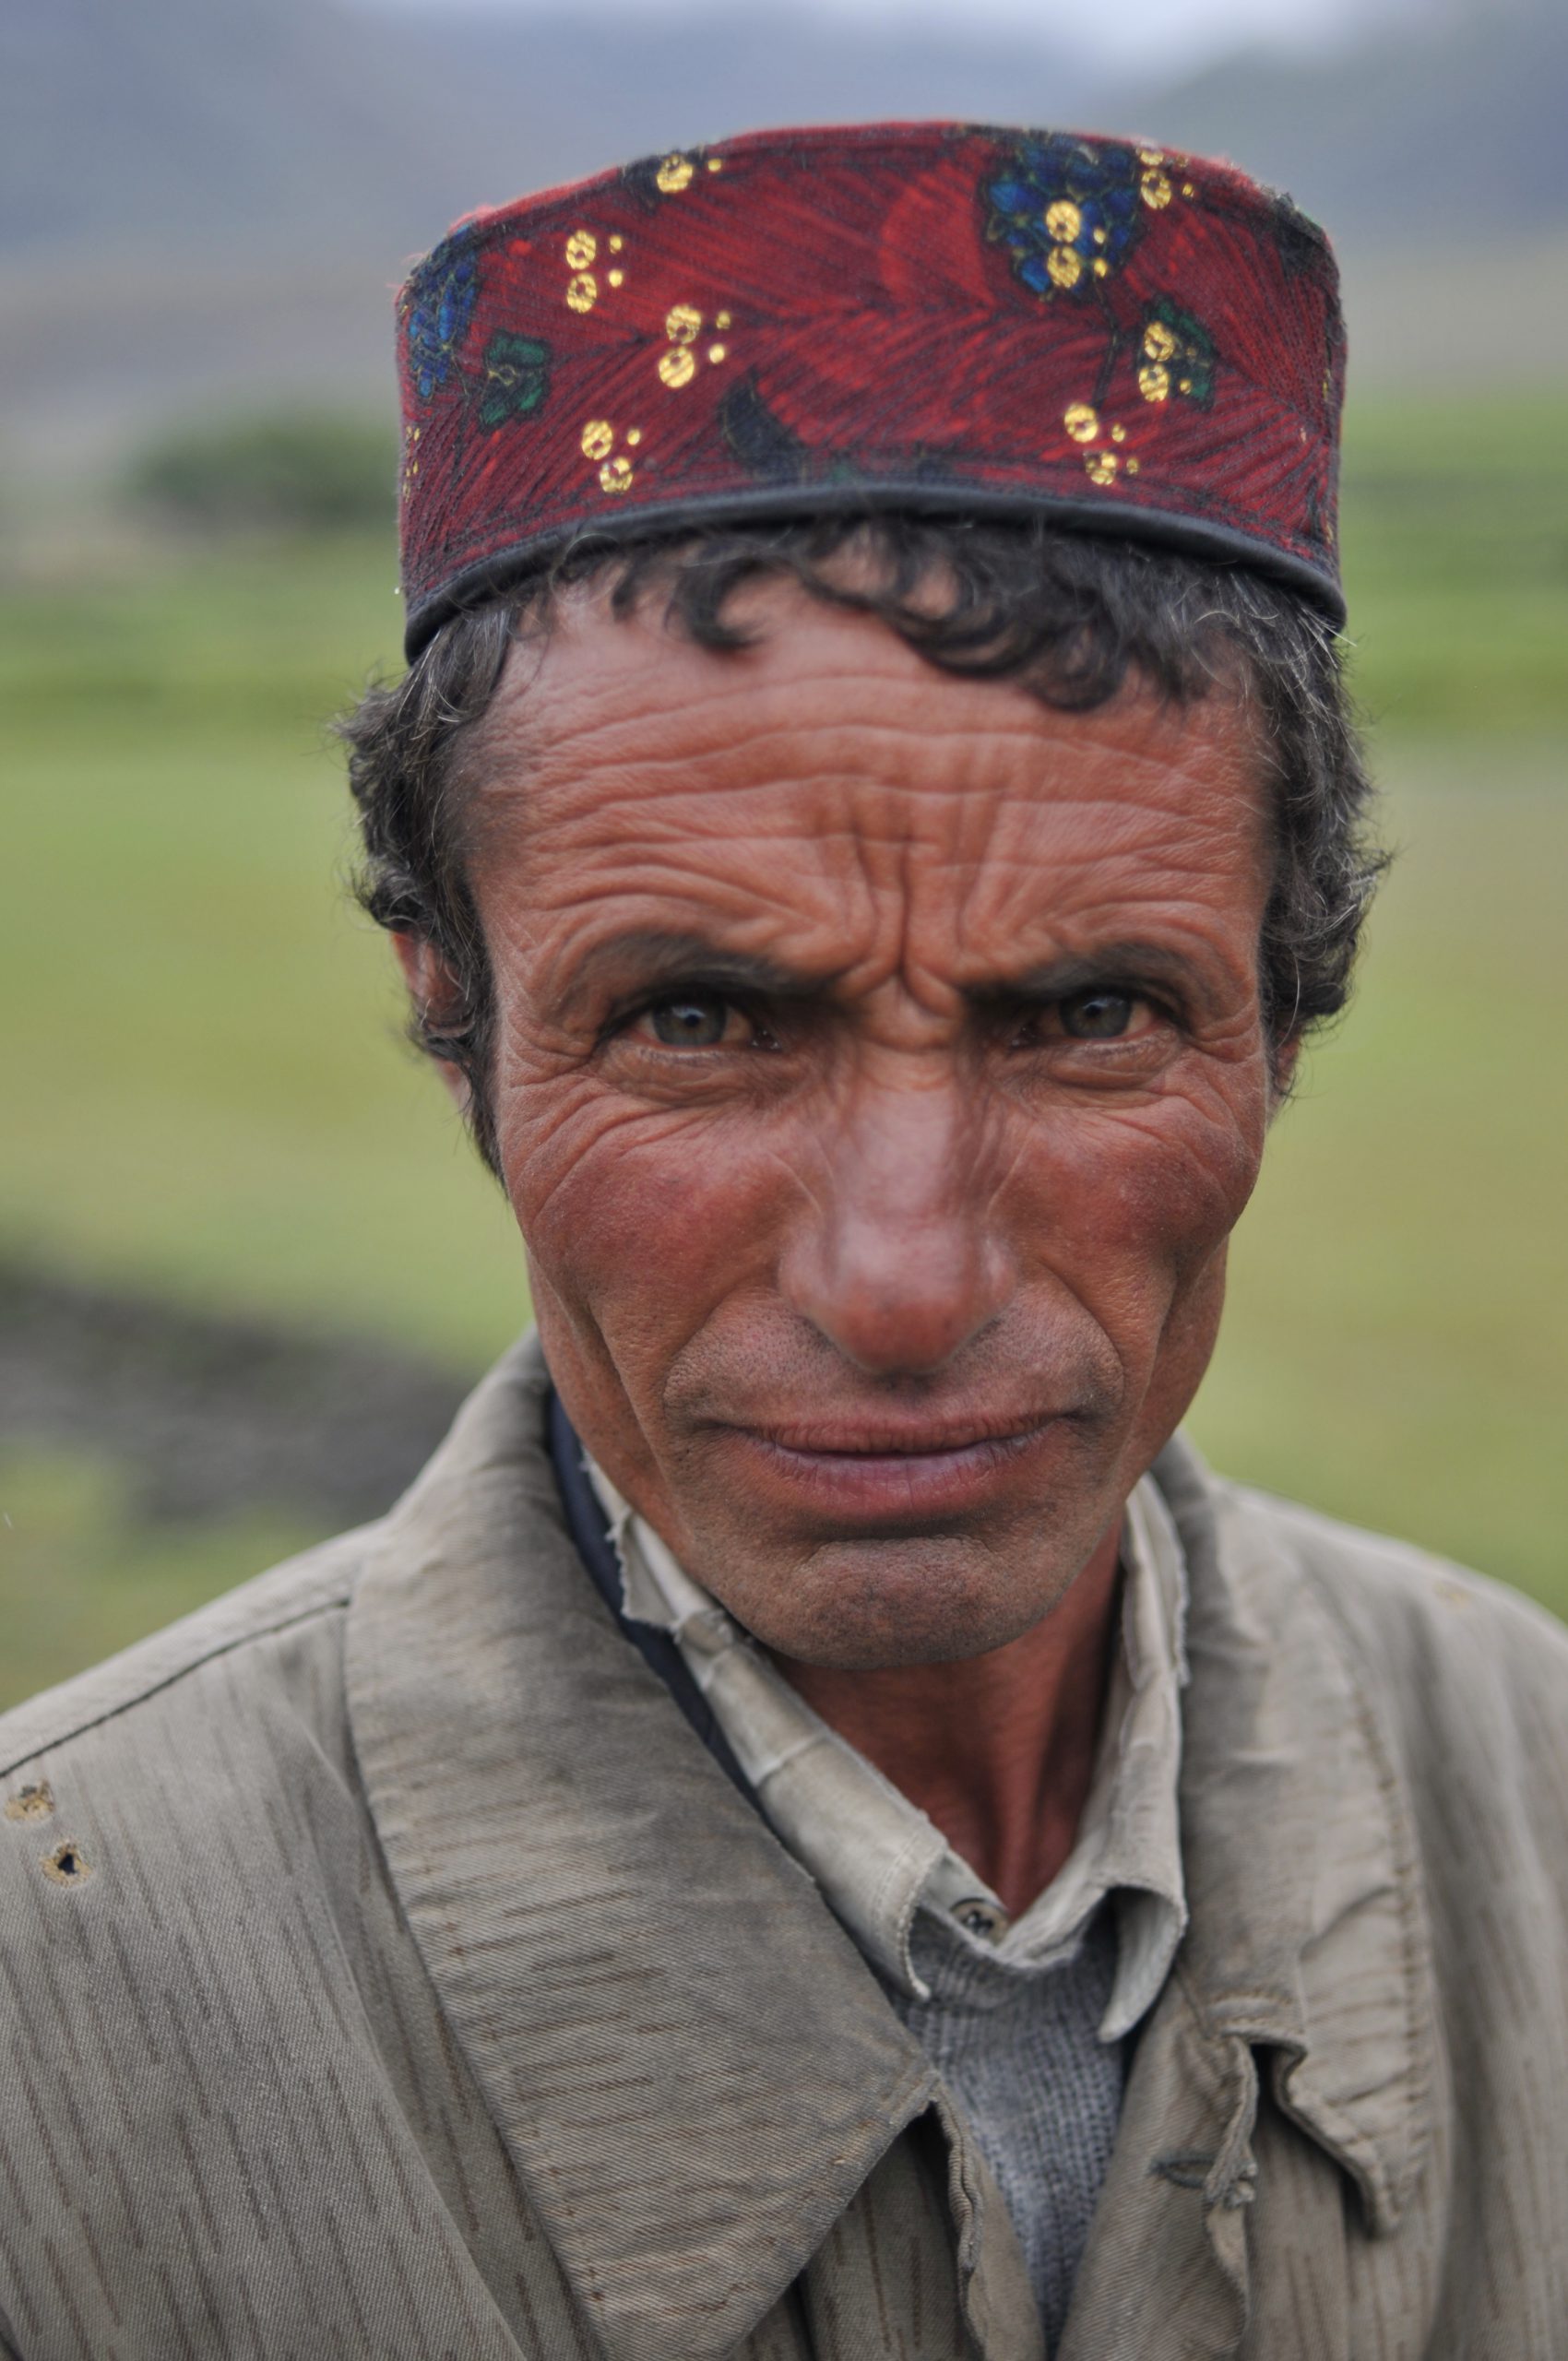 Afghanistan - The Wakhan